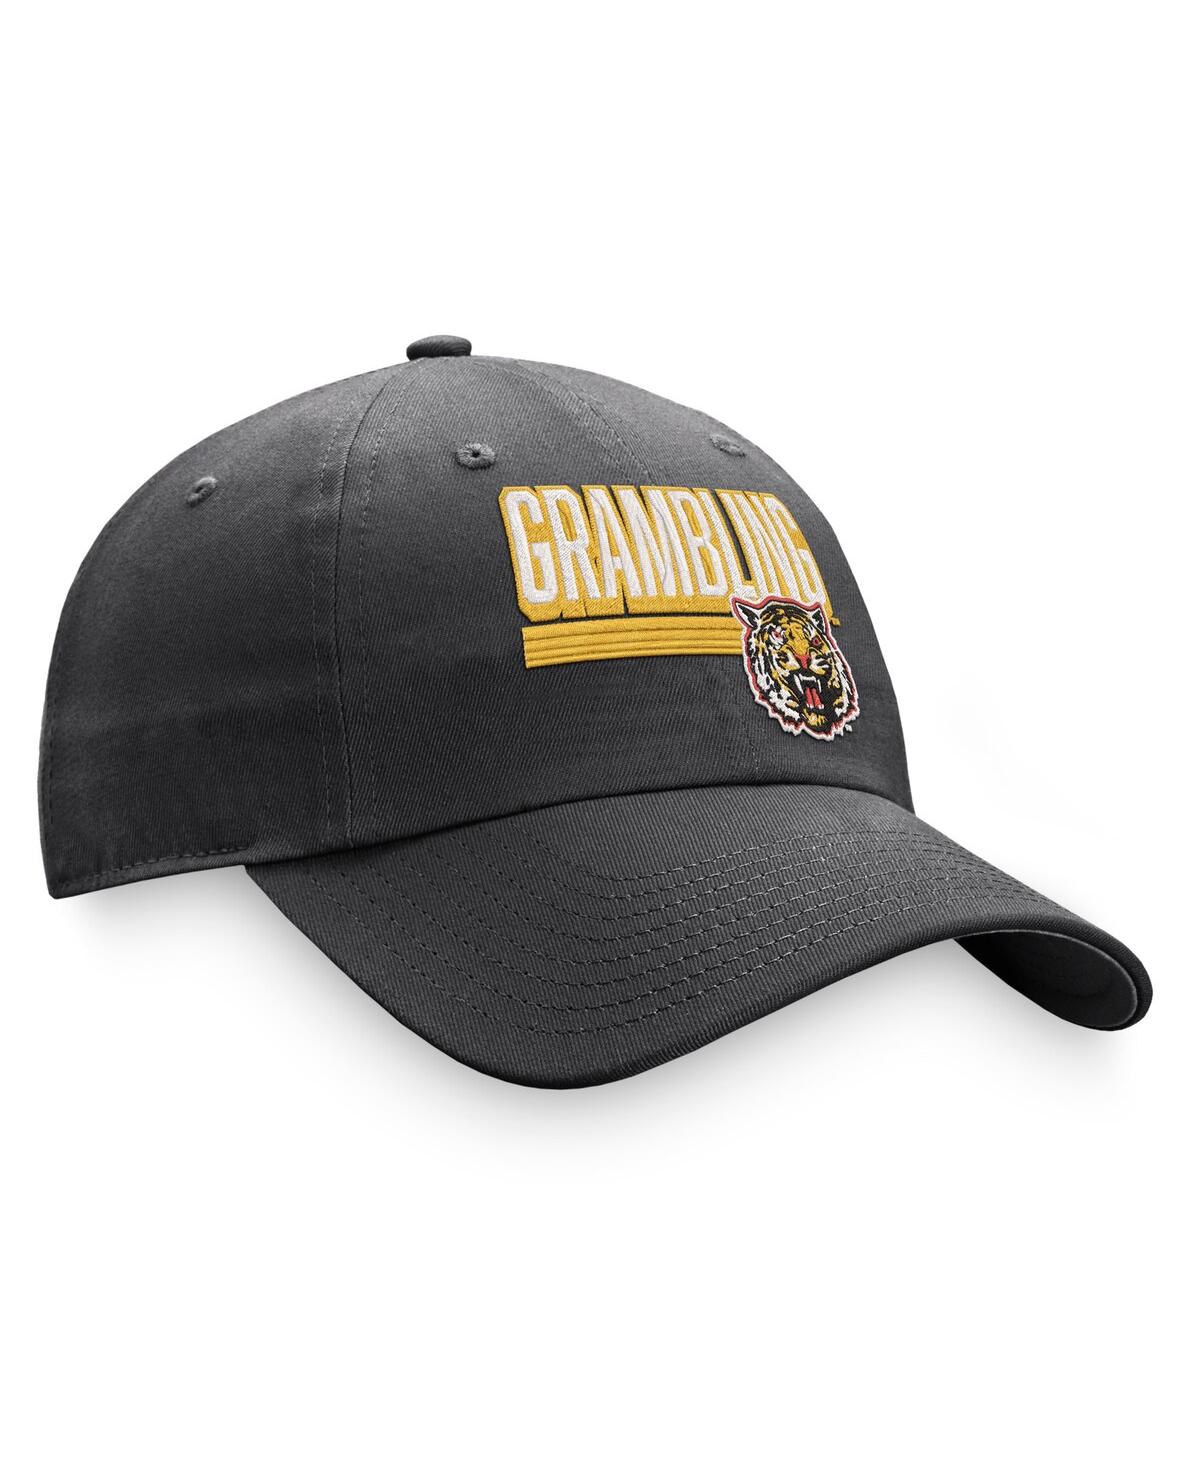 Shop Top Of The World Men's  Charcoal Grambling Tigers Slice Adjustable Hat